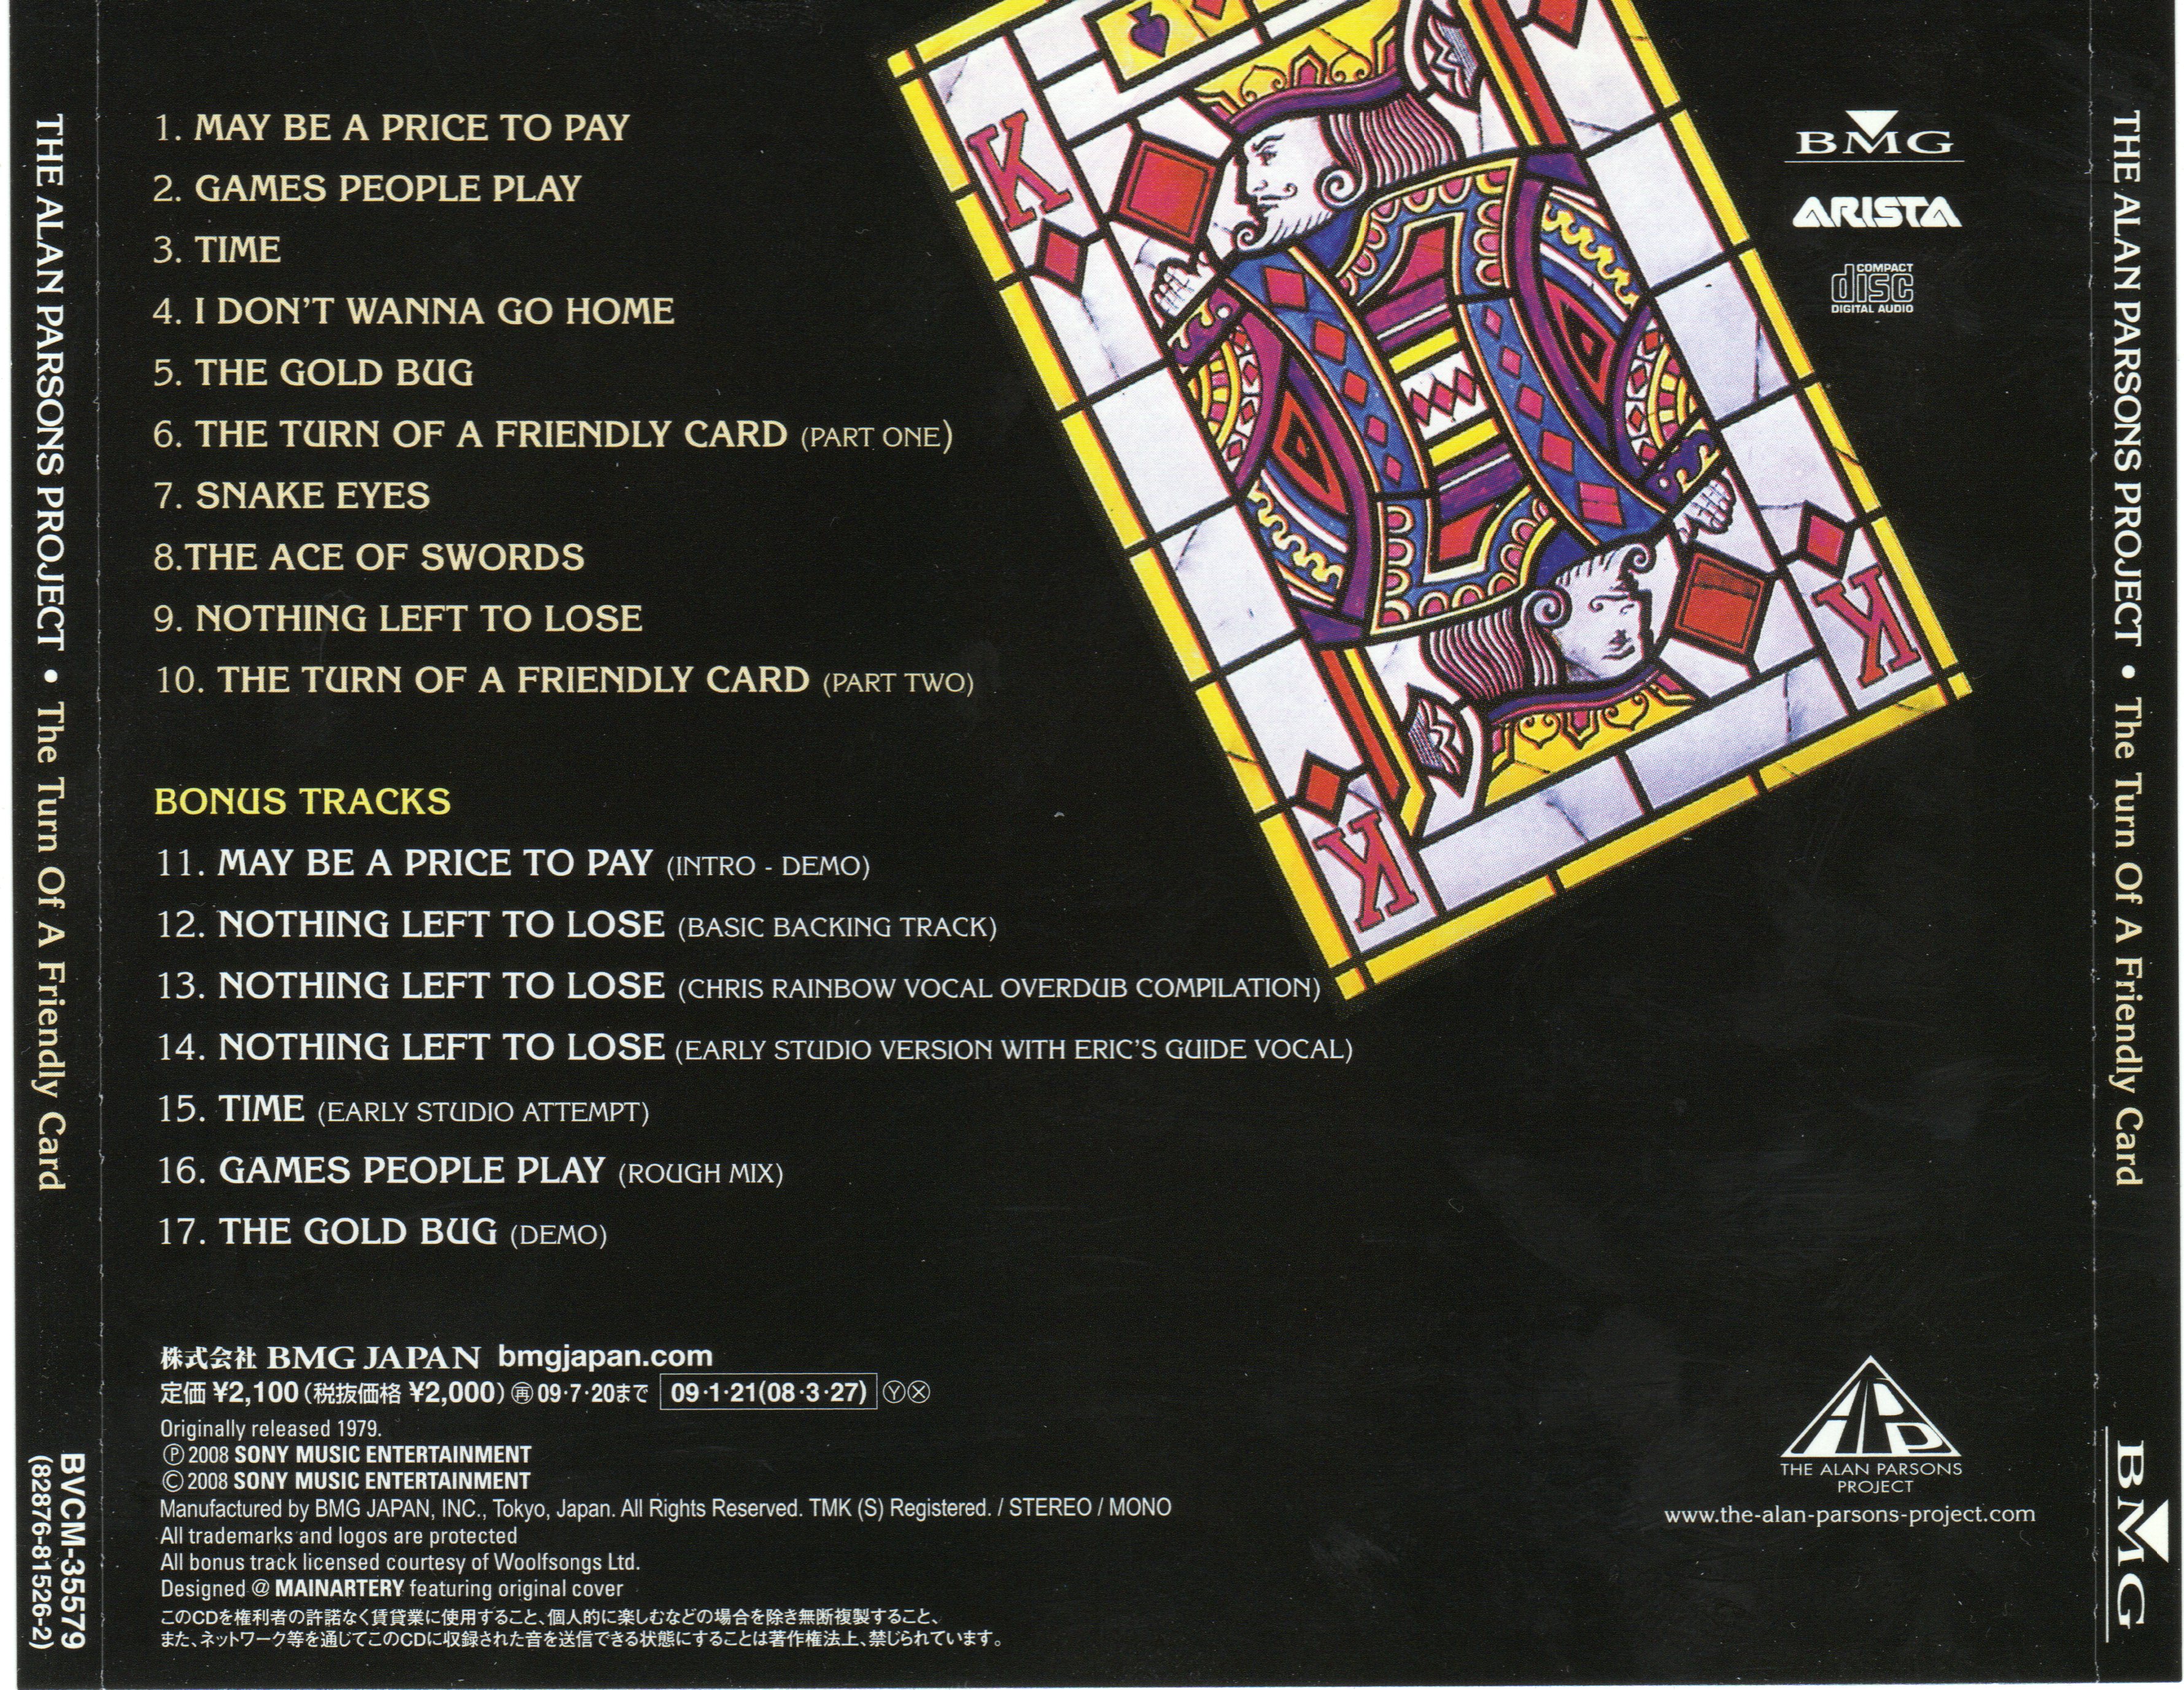 The Alan Parsons Project - 1979 - Eve (2009 Japan)